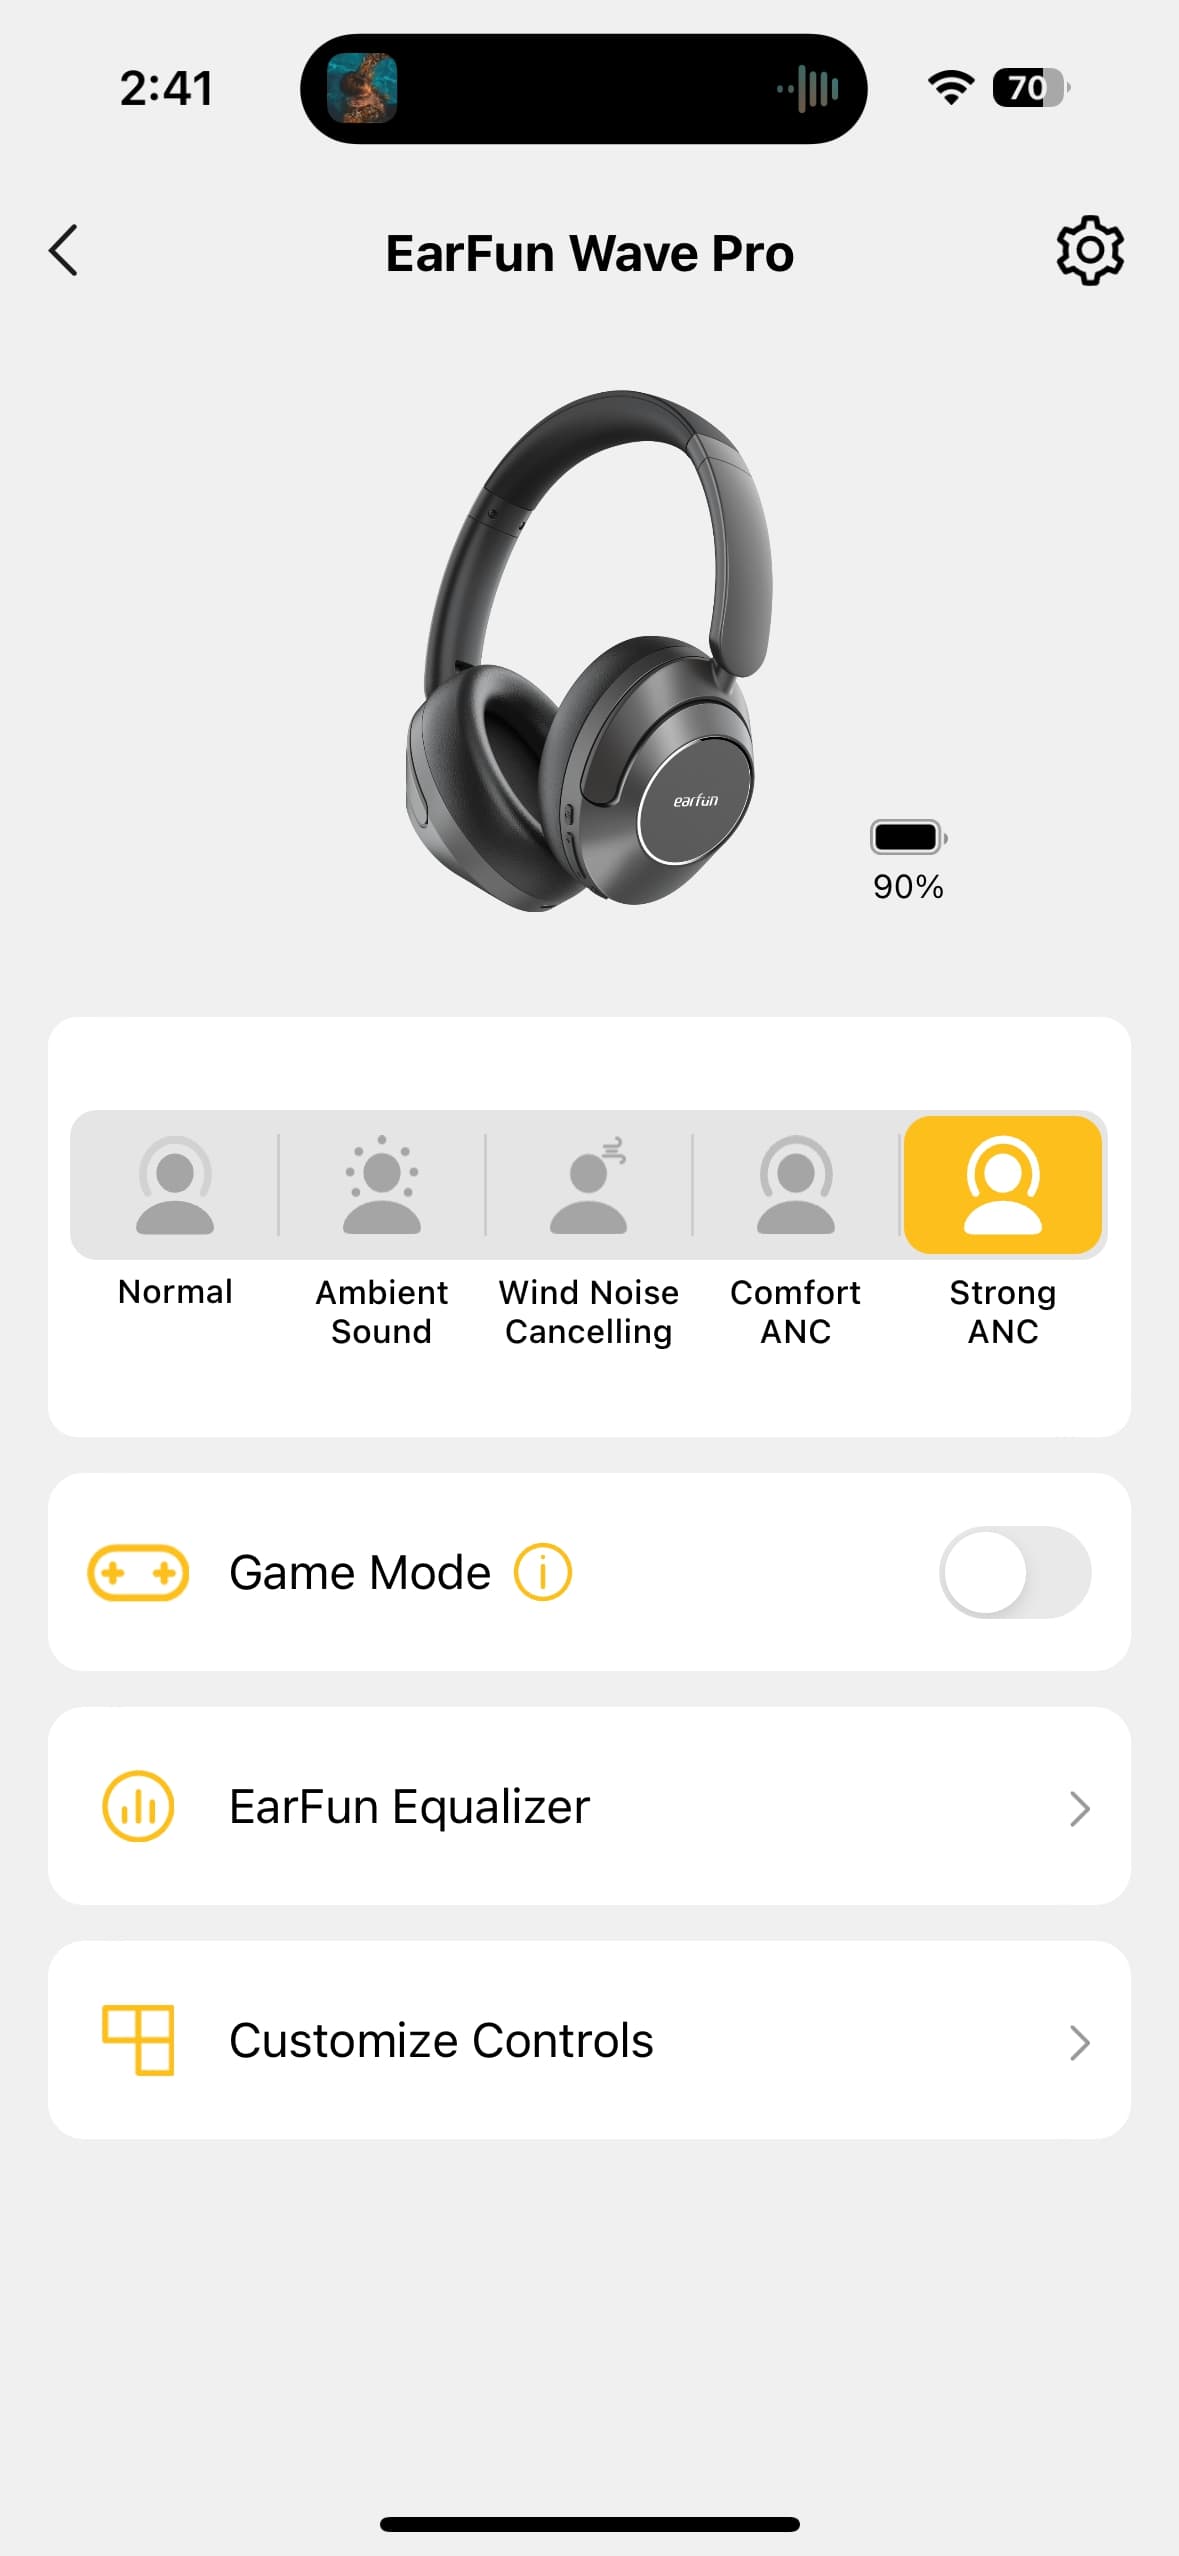 EarFun Wave Pro app home screen.